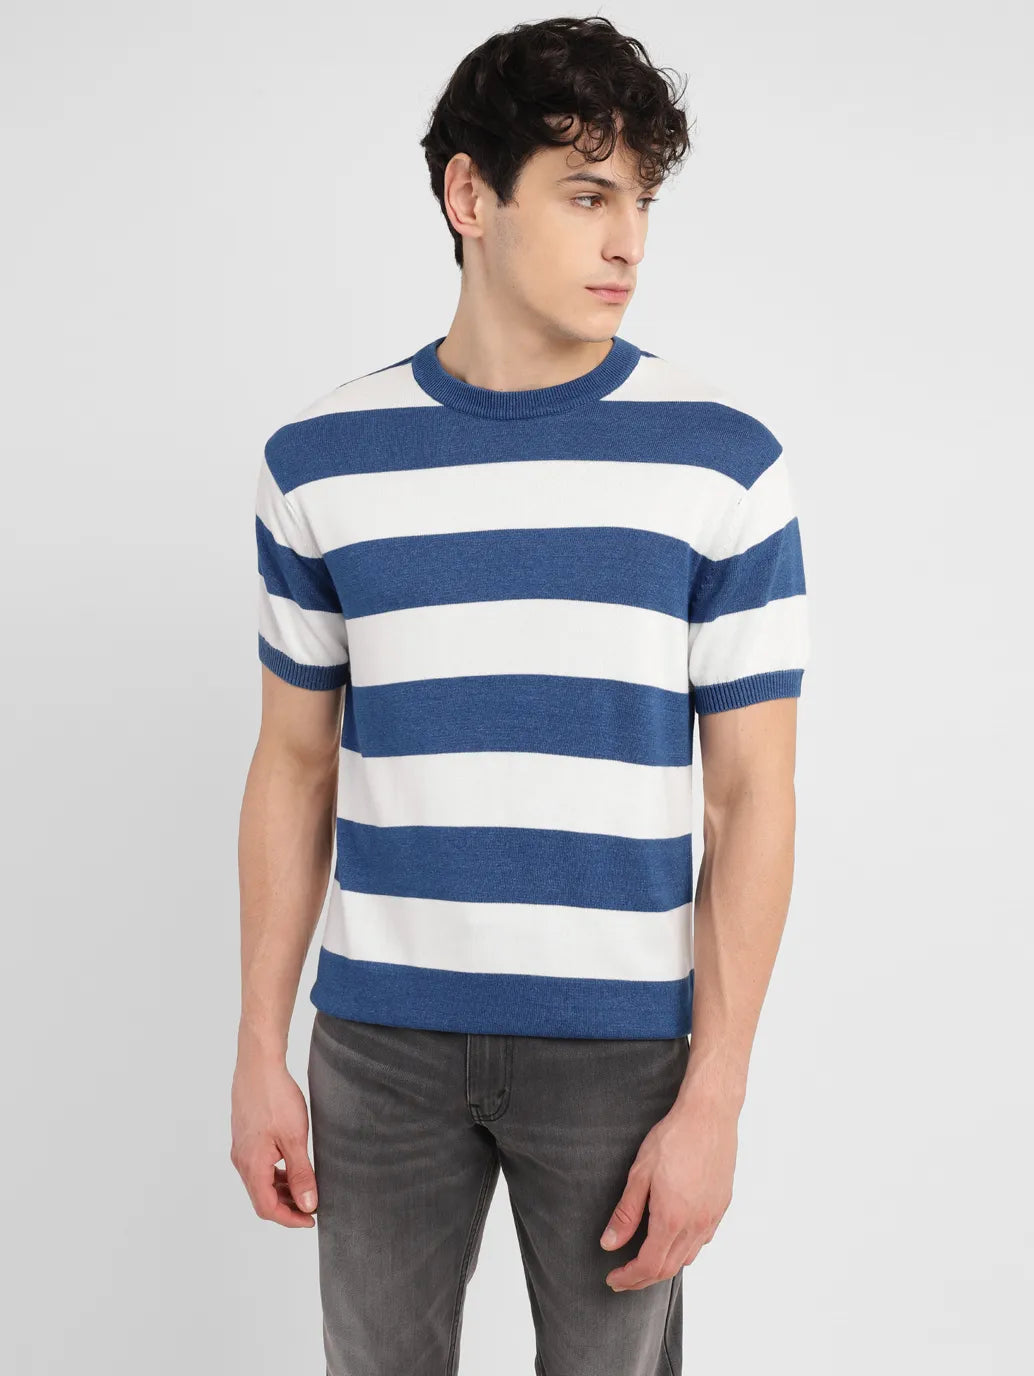 Men's Striped Blue Crew Neck Sweater